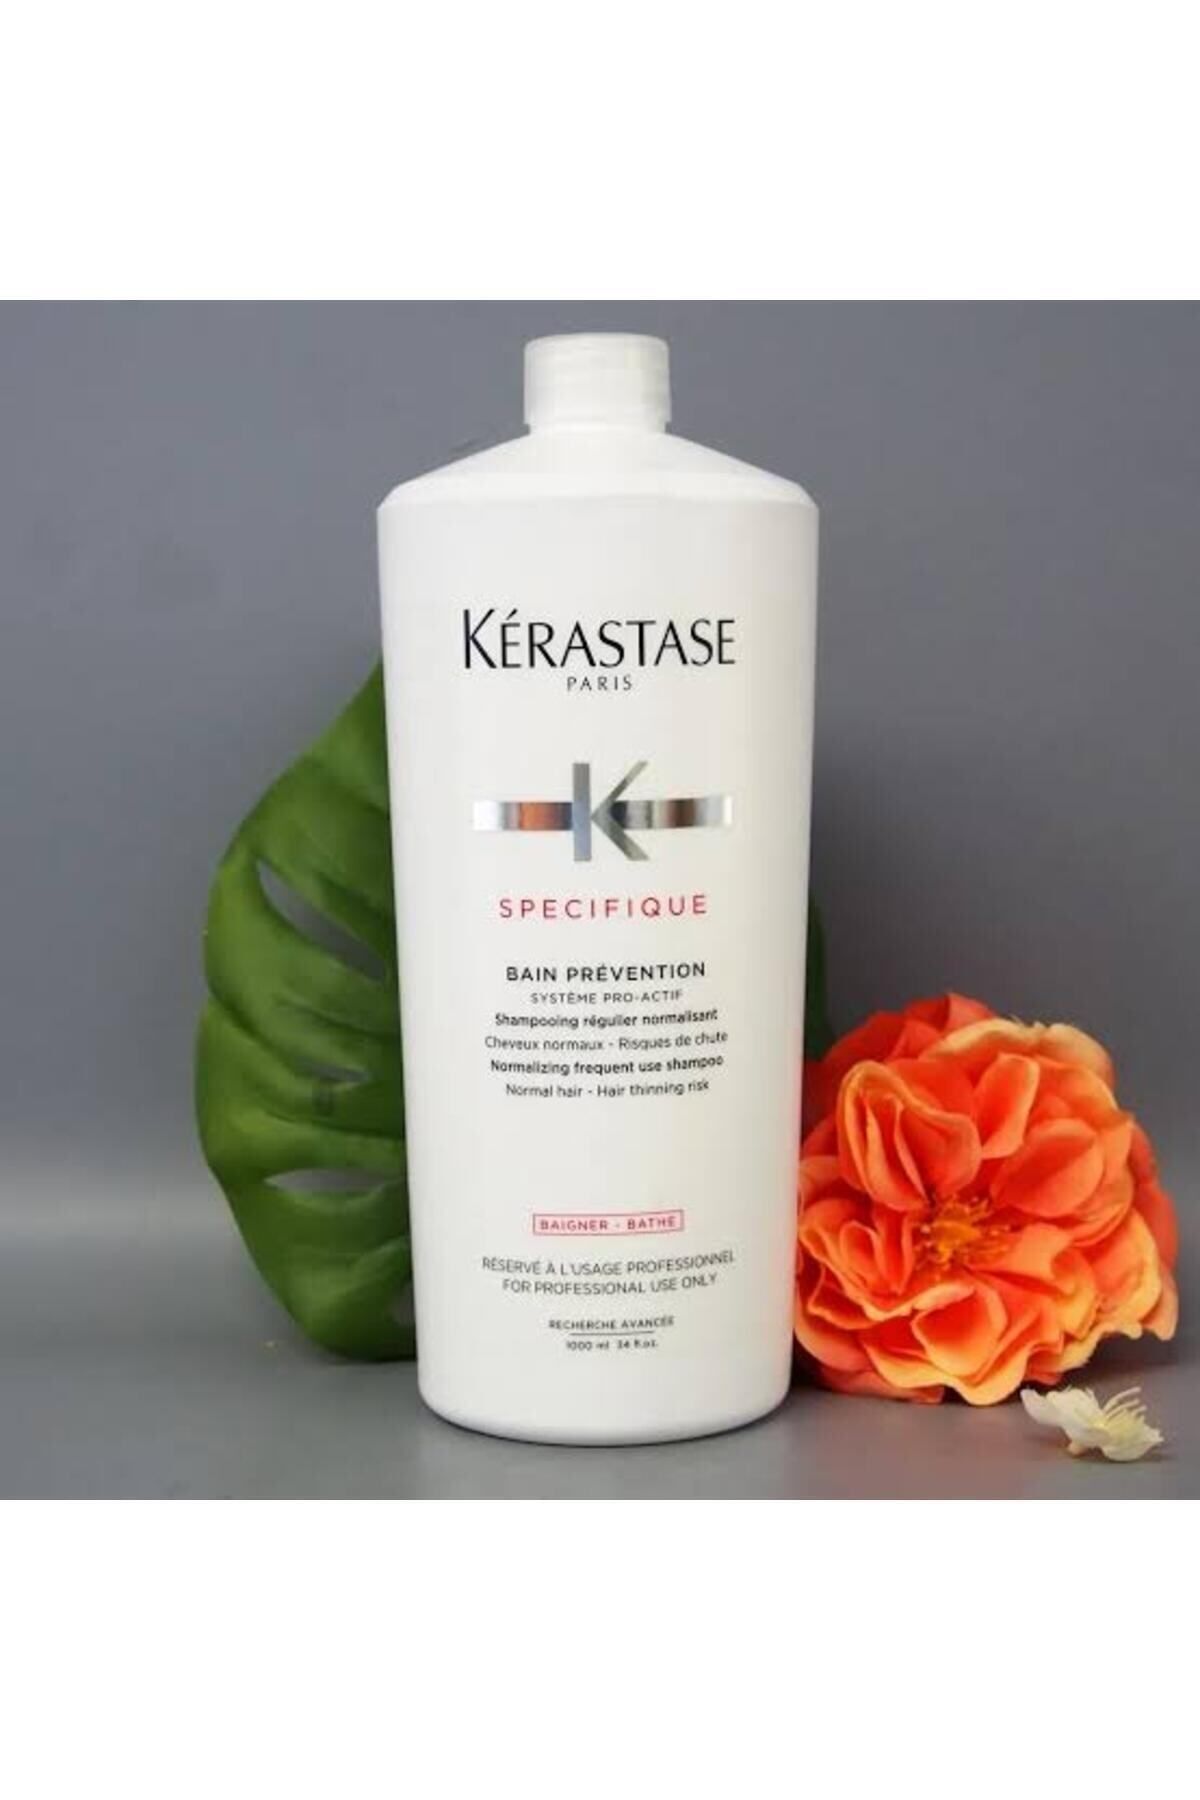 Kerastase Kérastase Specifique Bain Prévention 1000ml - Preventive Hair Loss Shampoo SHİNEE273